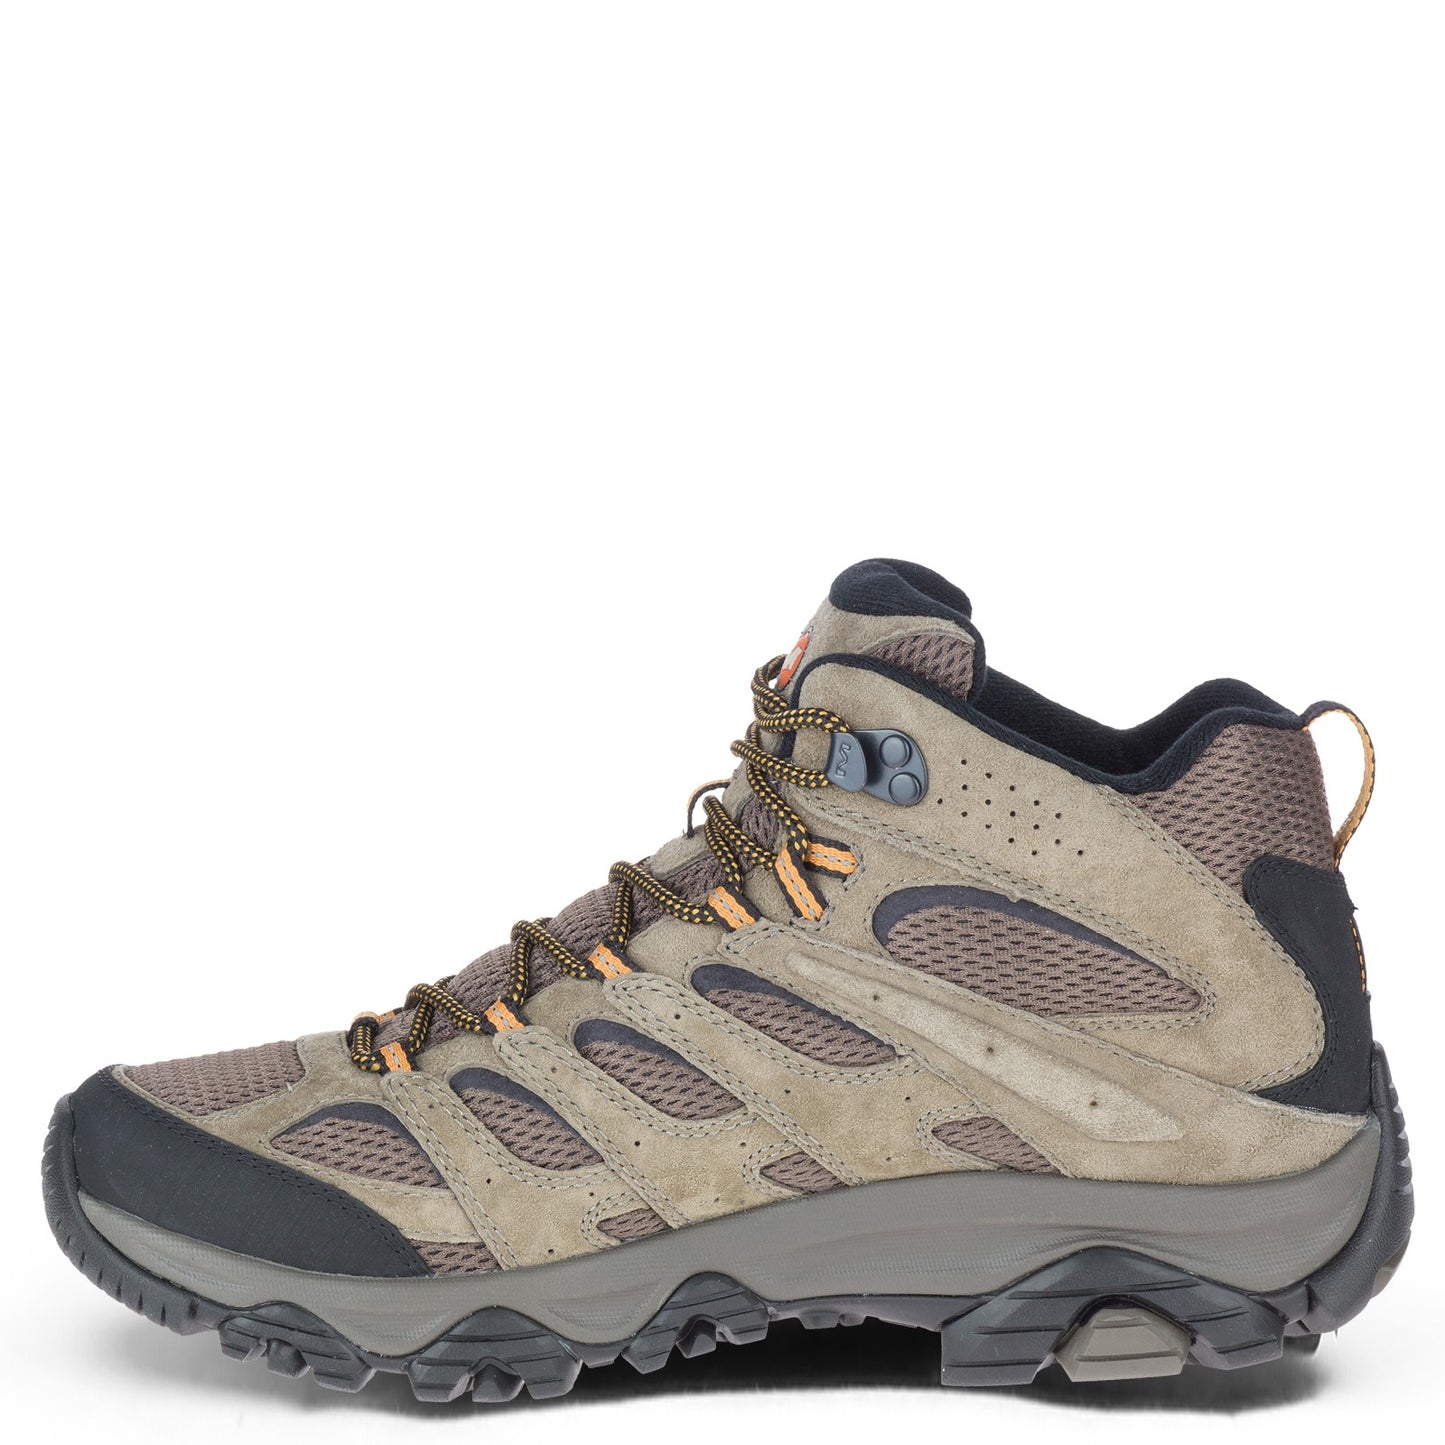 Peltz Shoes  Men's Merrell Moab 3 Mid Hiking Boot WALNUT J035869